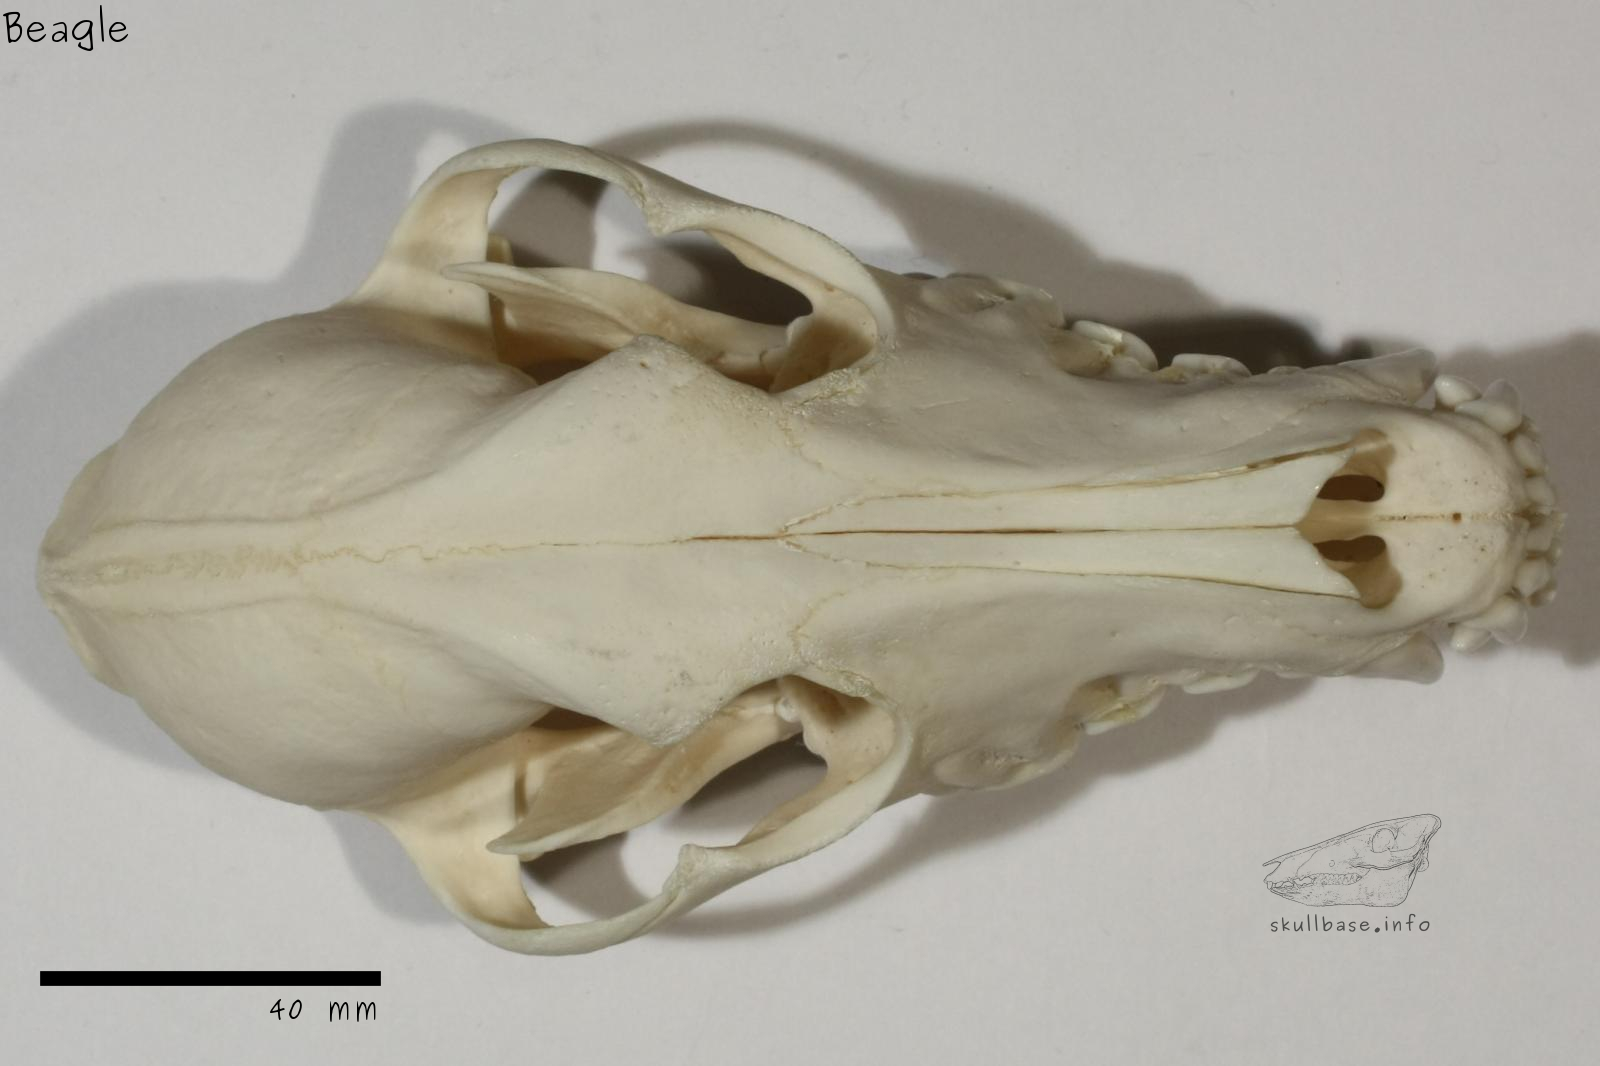 Beagle (Canis lupus familiaris) skull dorsal view